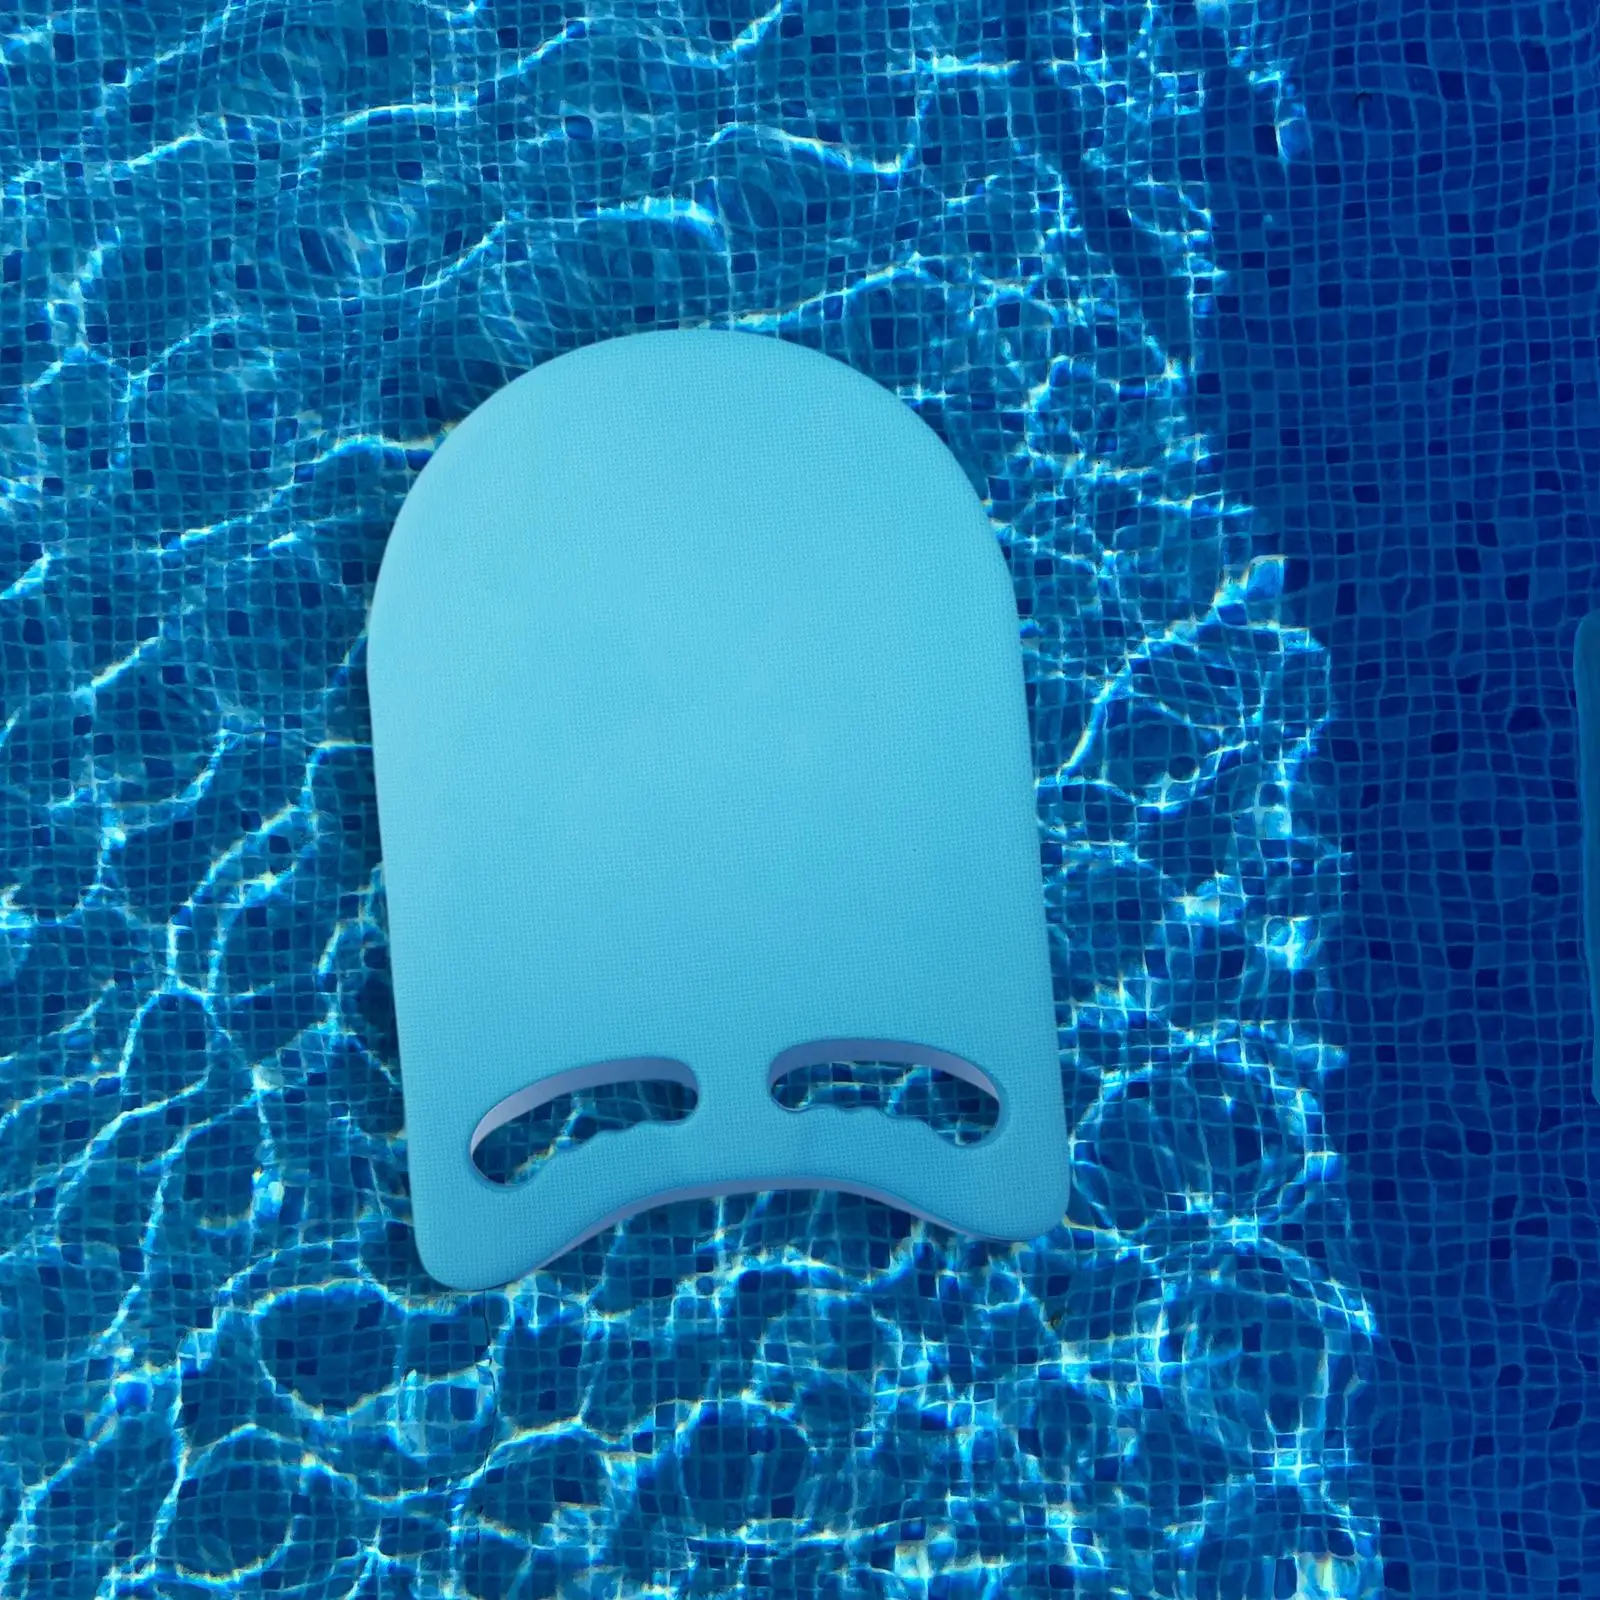 Swim Kickboard Float Device Swim Training Aid for Beginners Child Men